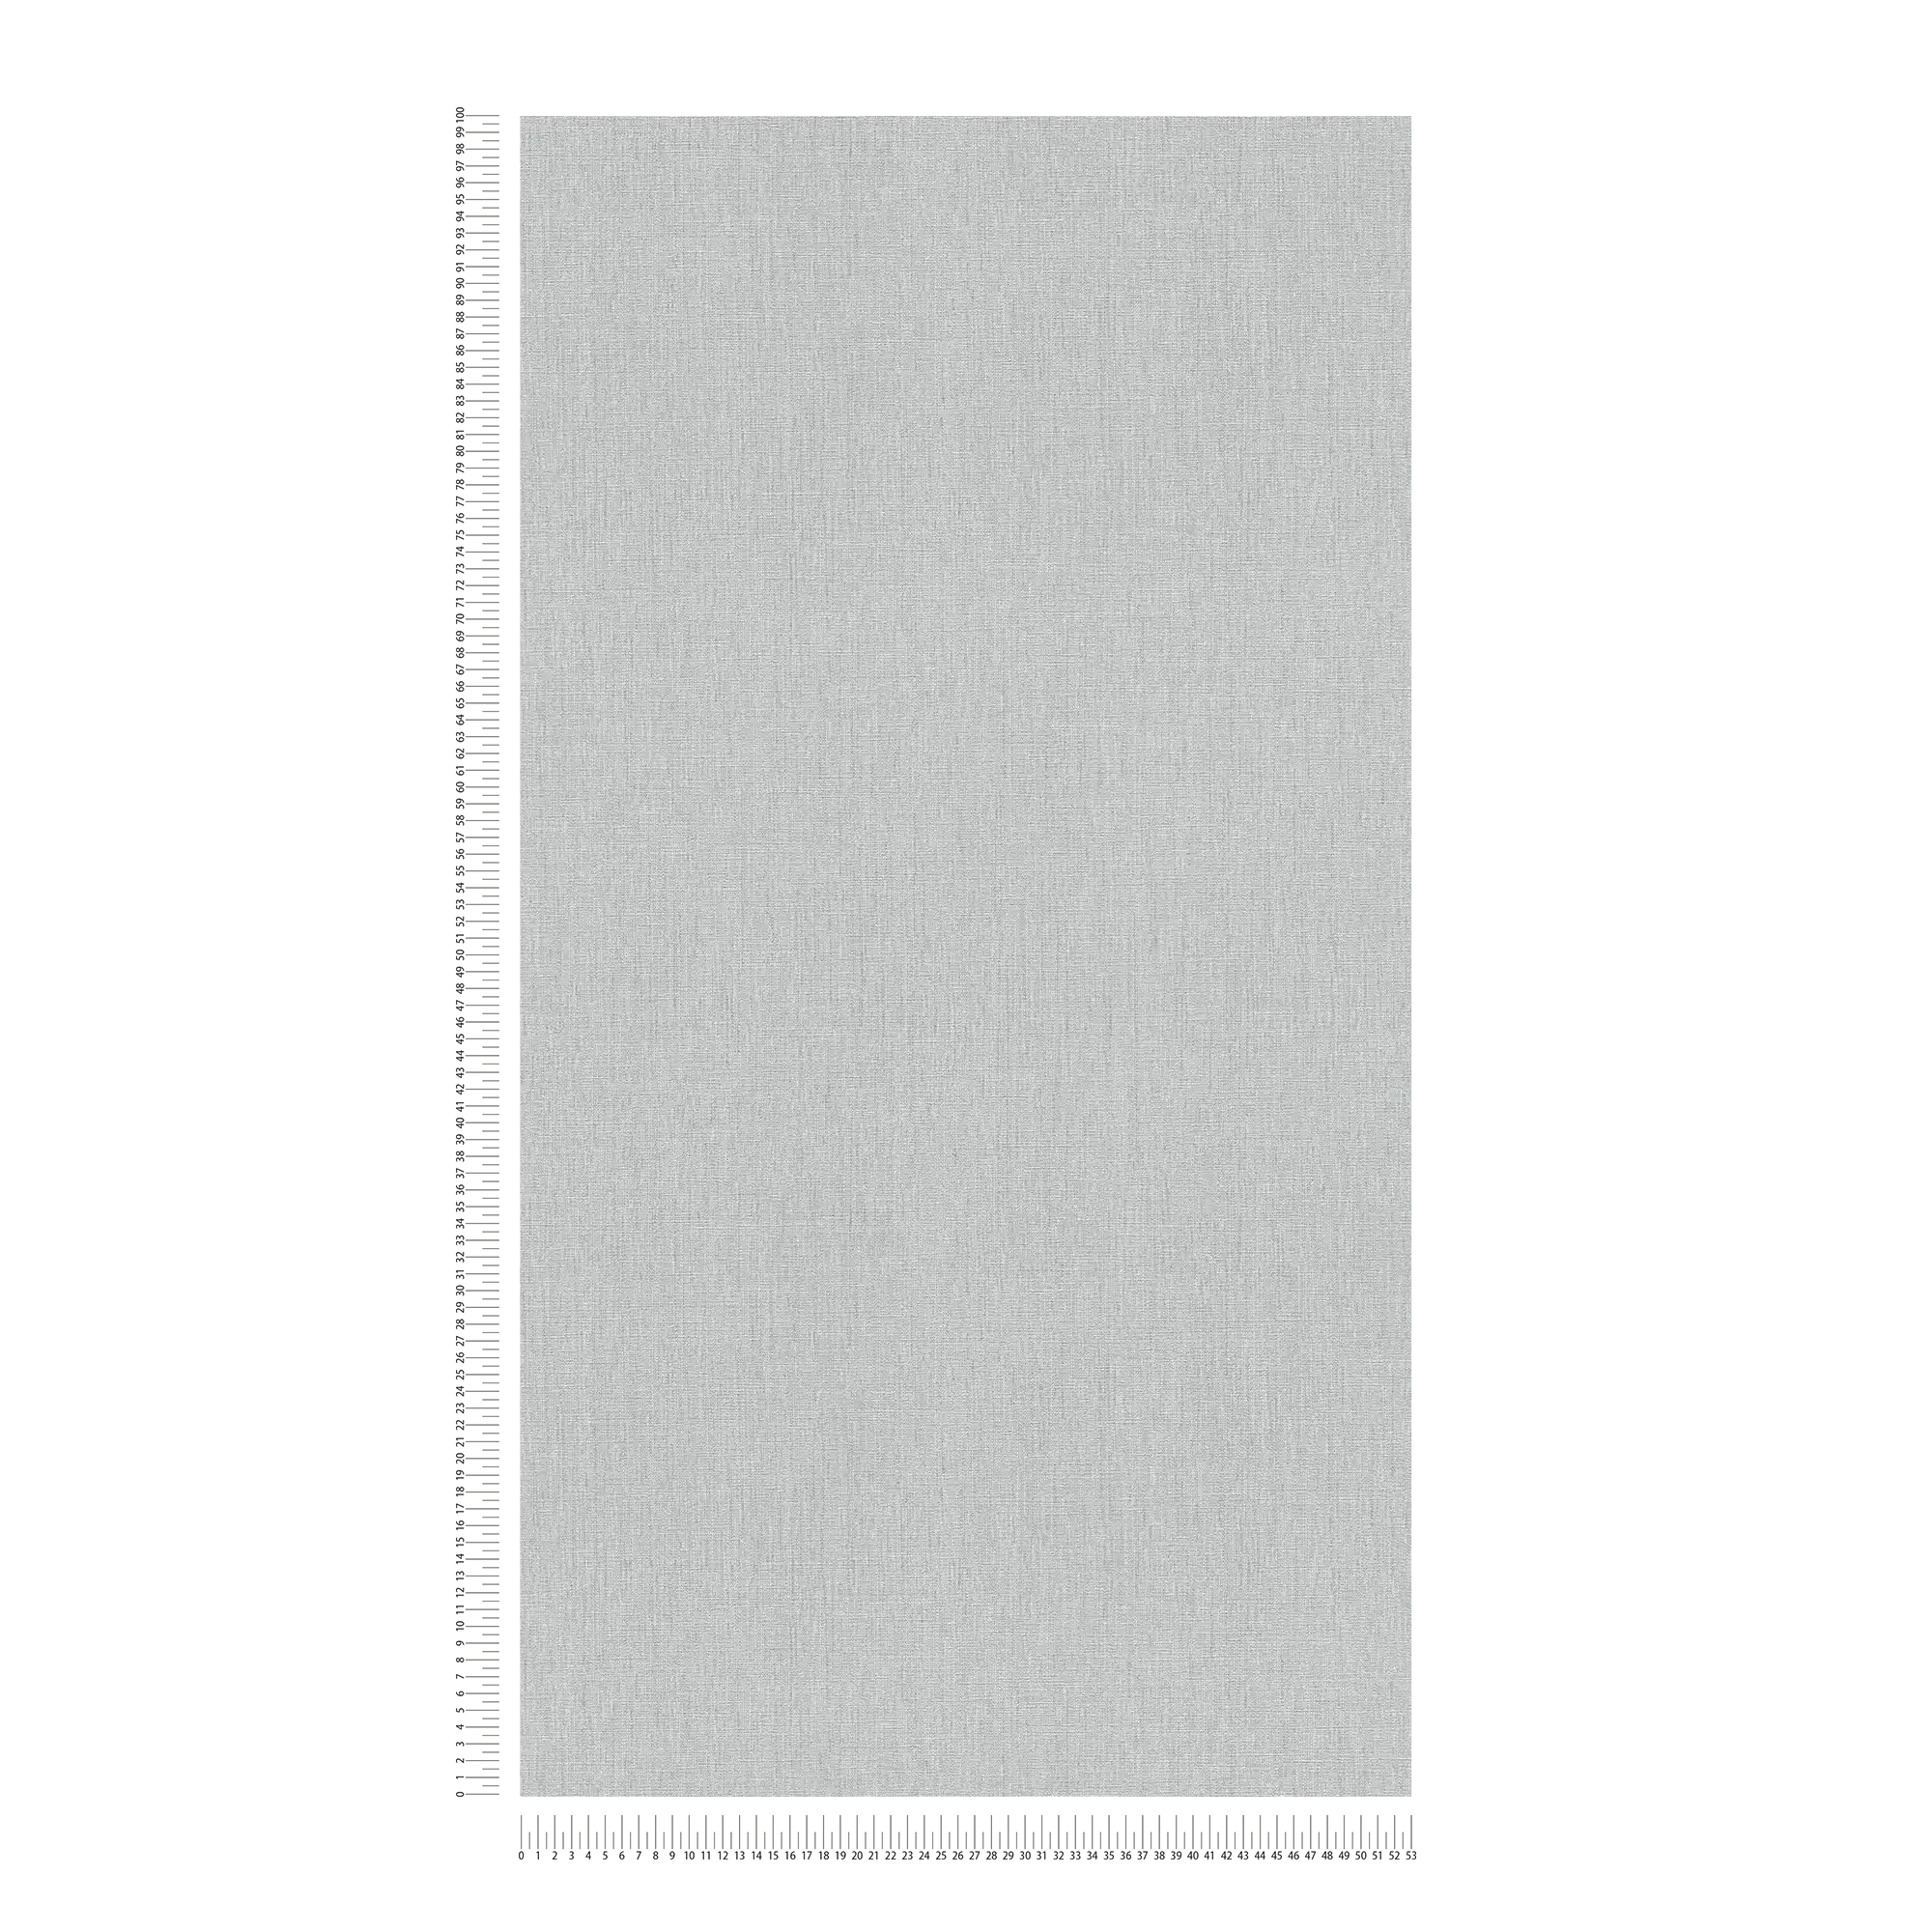             Papel pintado unitario ligeramente texturizado en un tono sencillo - gris
        